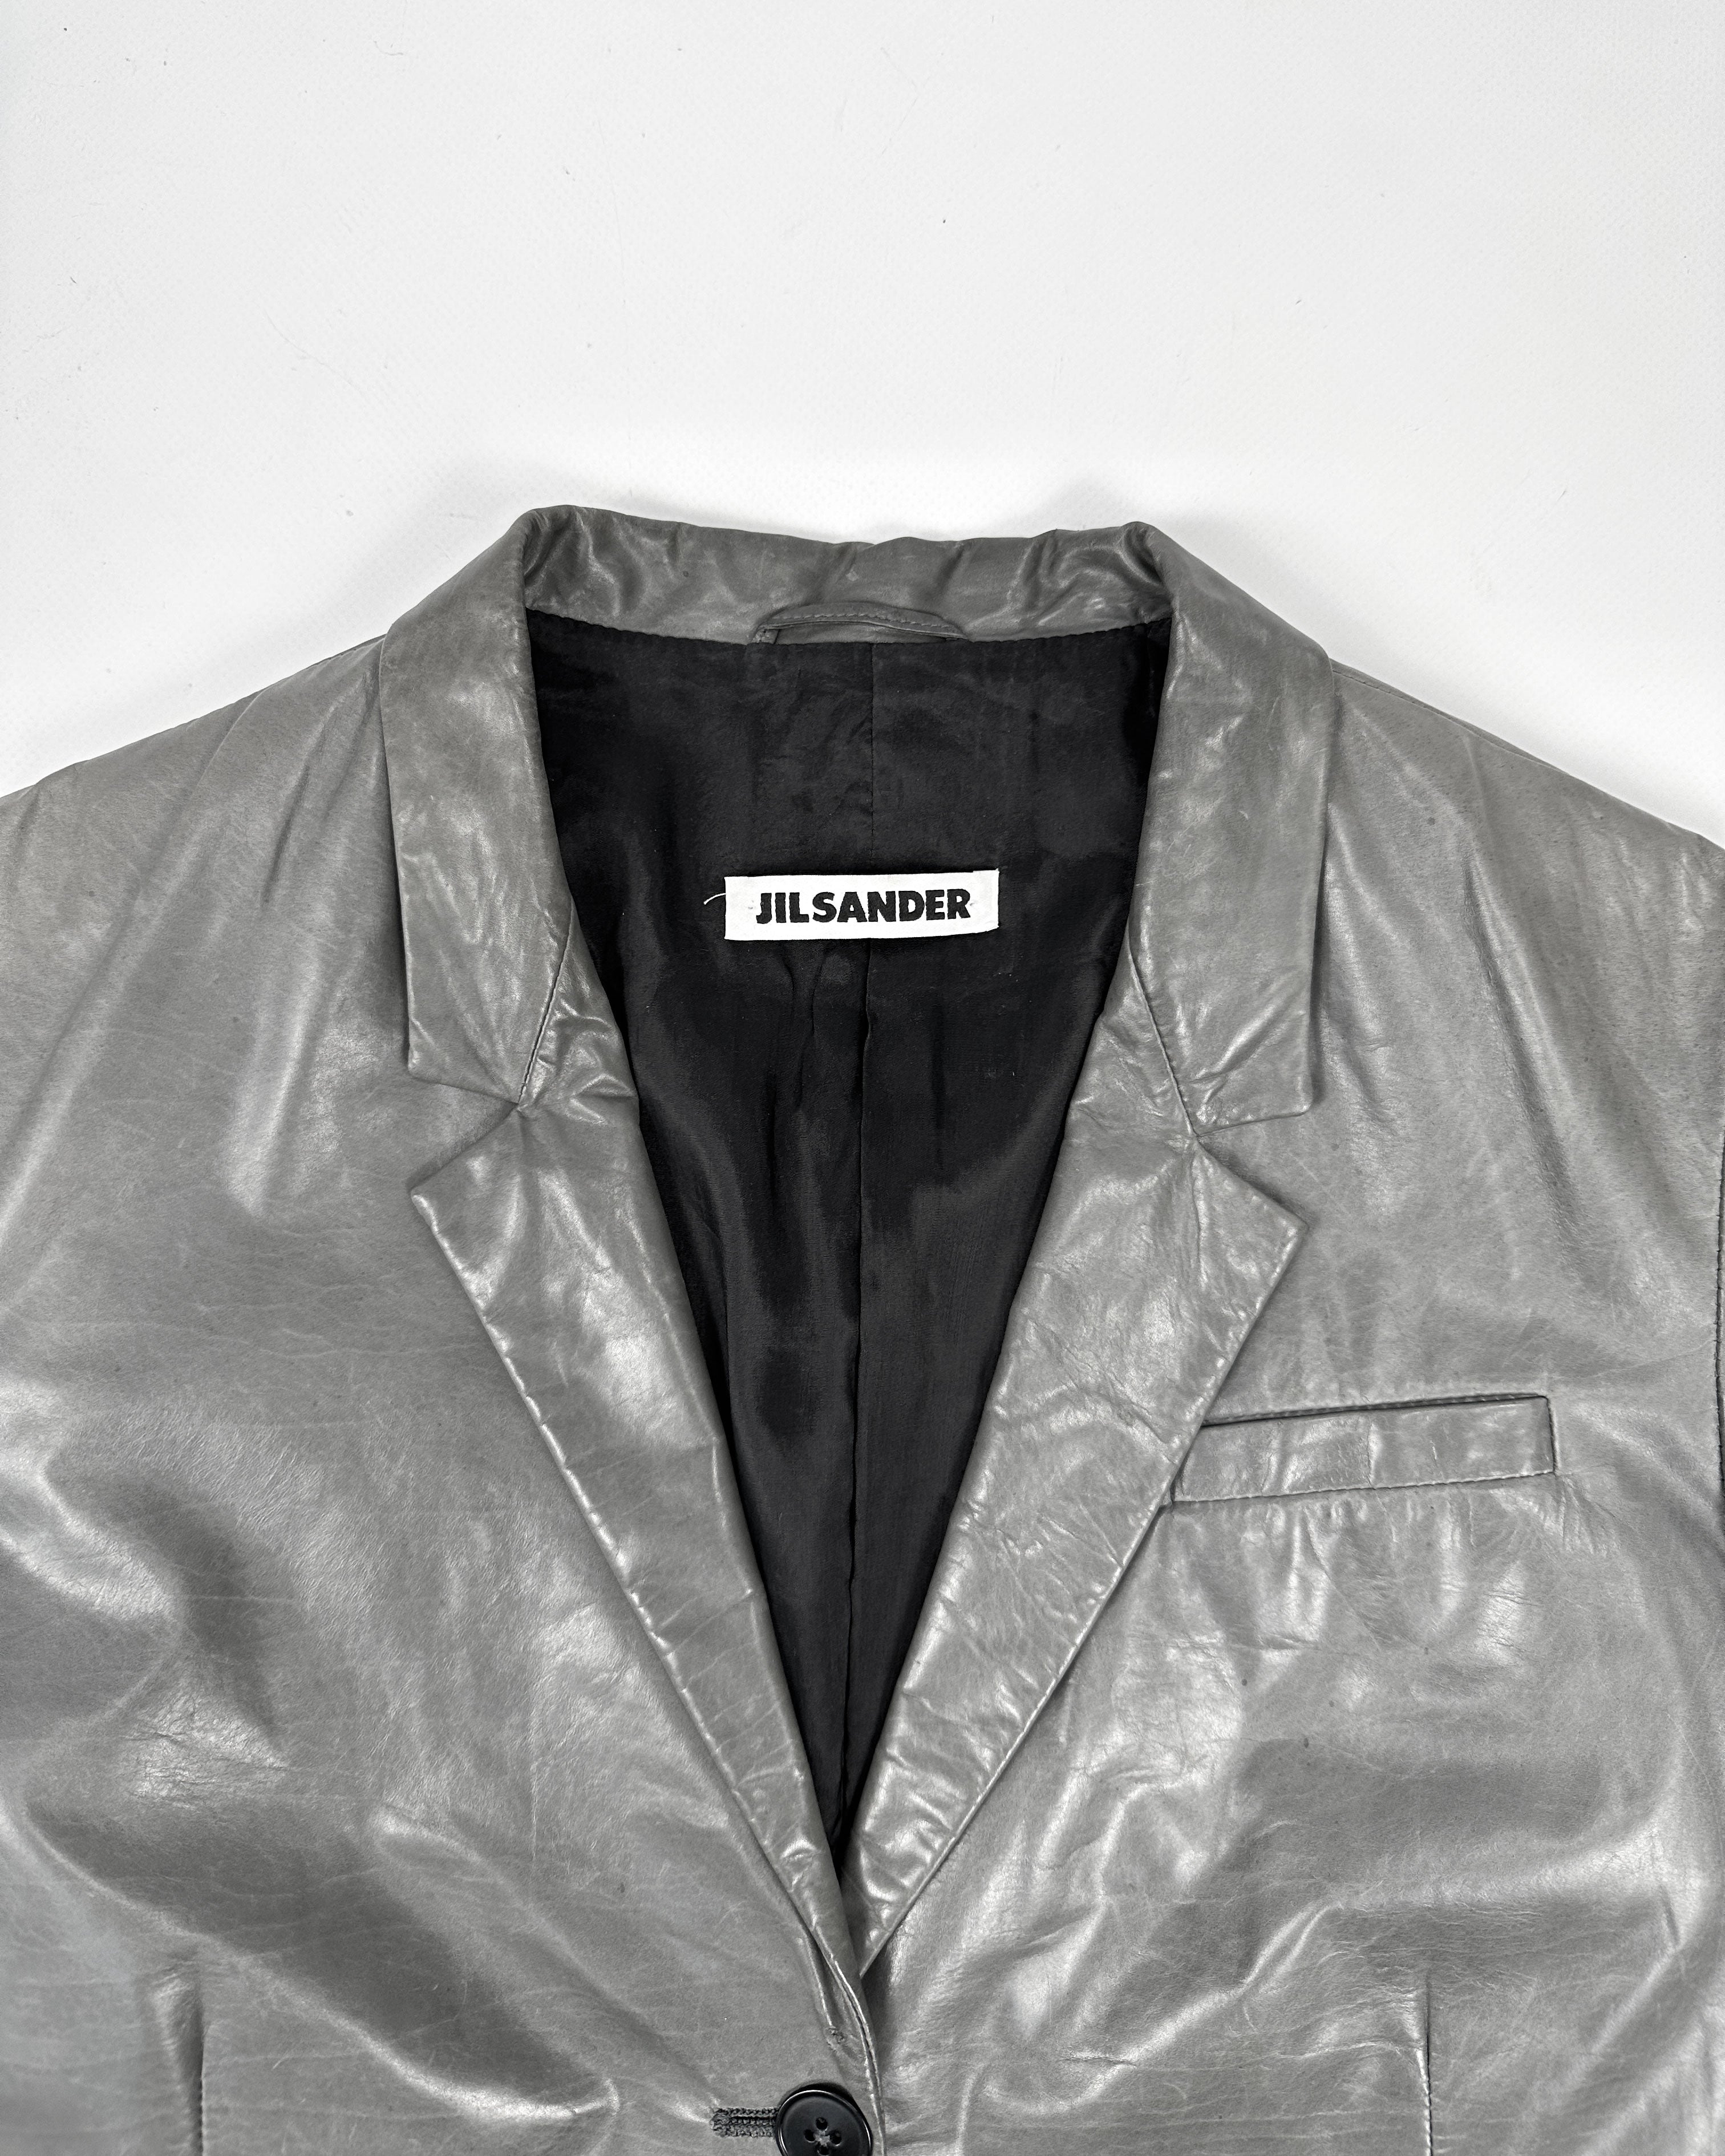 Jil Sander By Raf Simons Leather Jacket SS 2012 – Vintage TTS